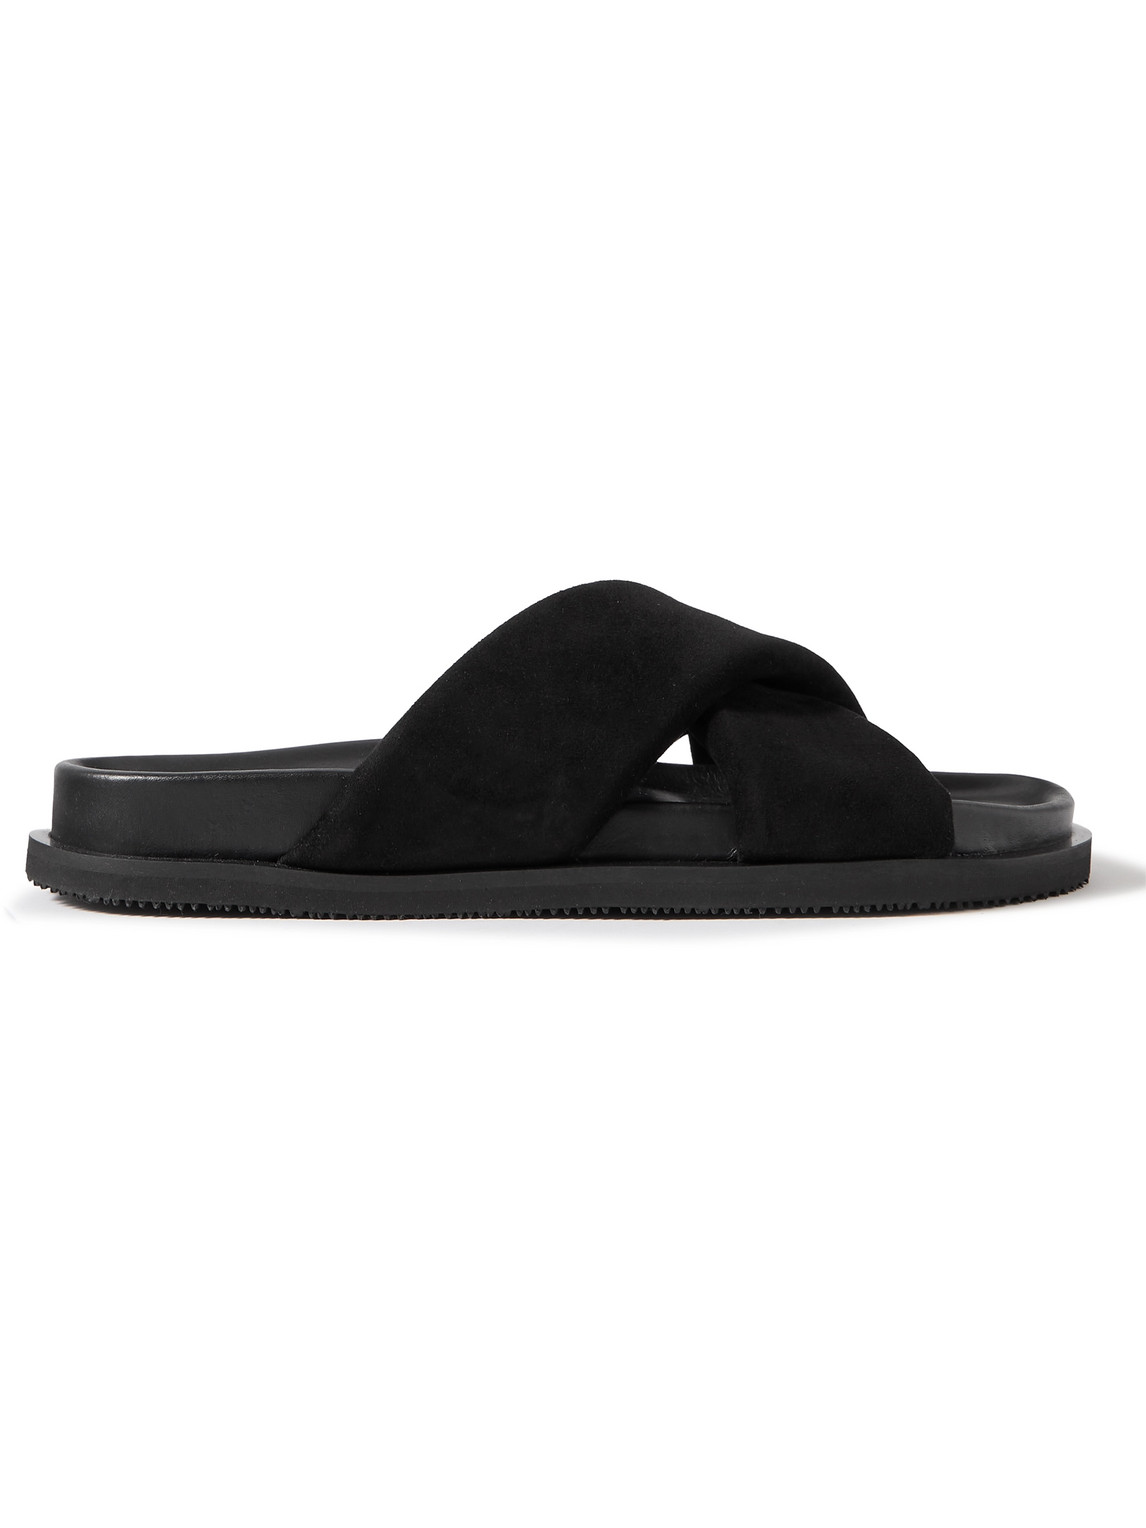 Mr P. Tom Padded Suede Sandals In Black